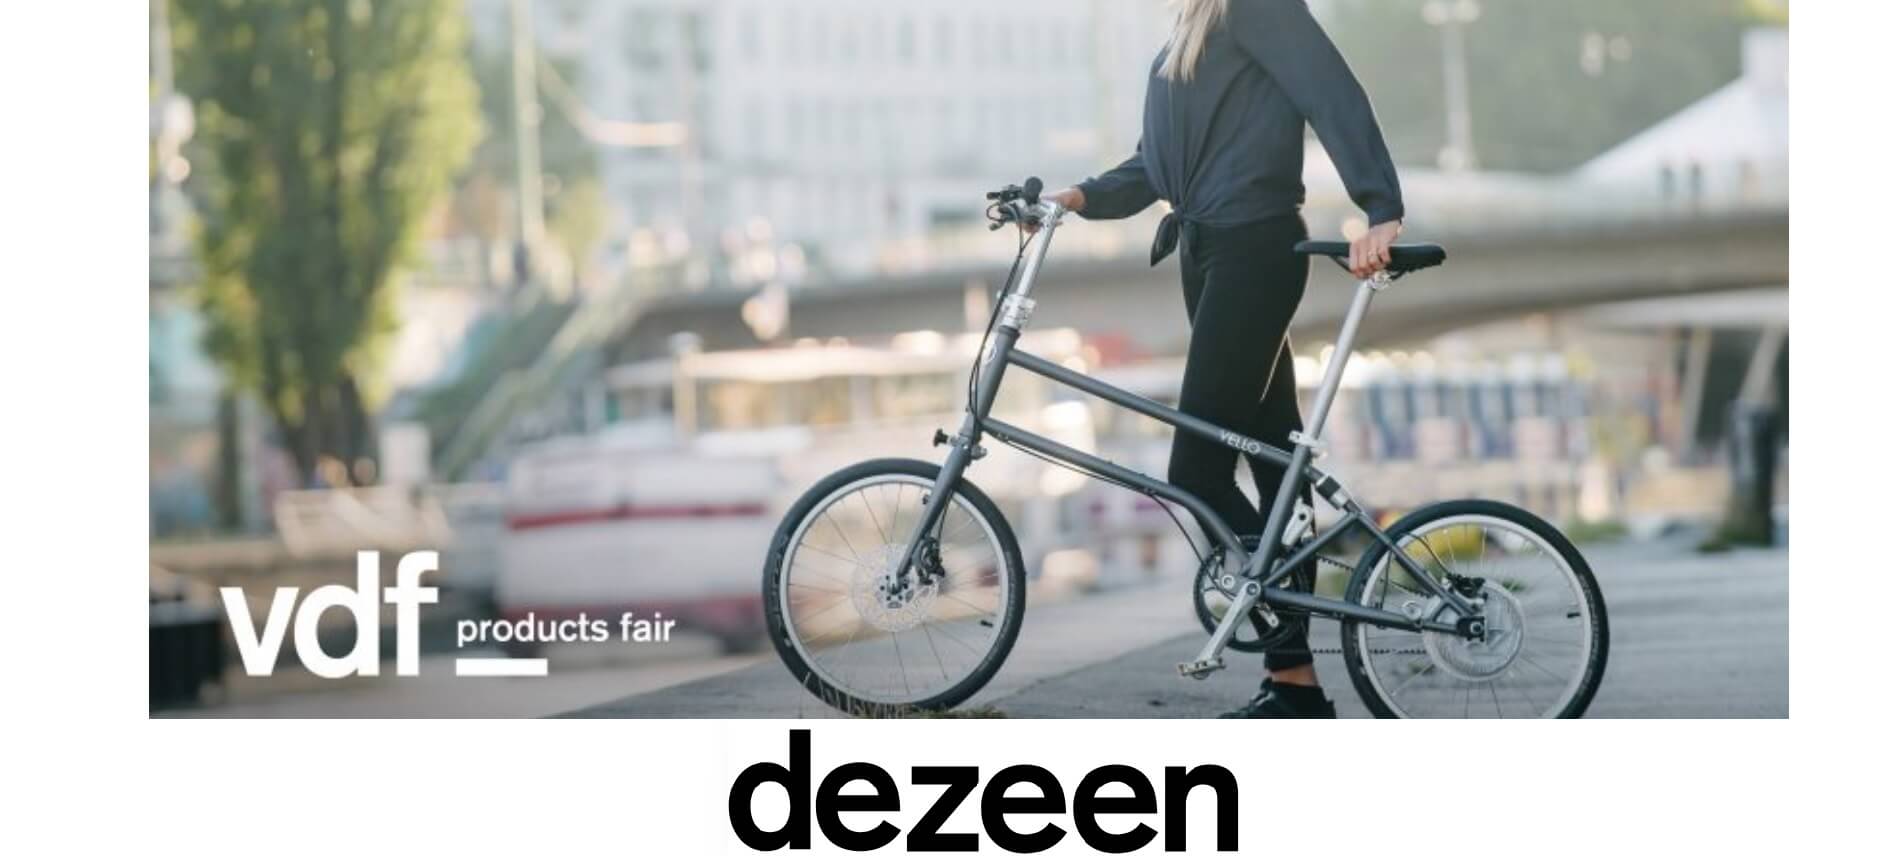 VELLO is featured in the DEZEEN design magazine